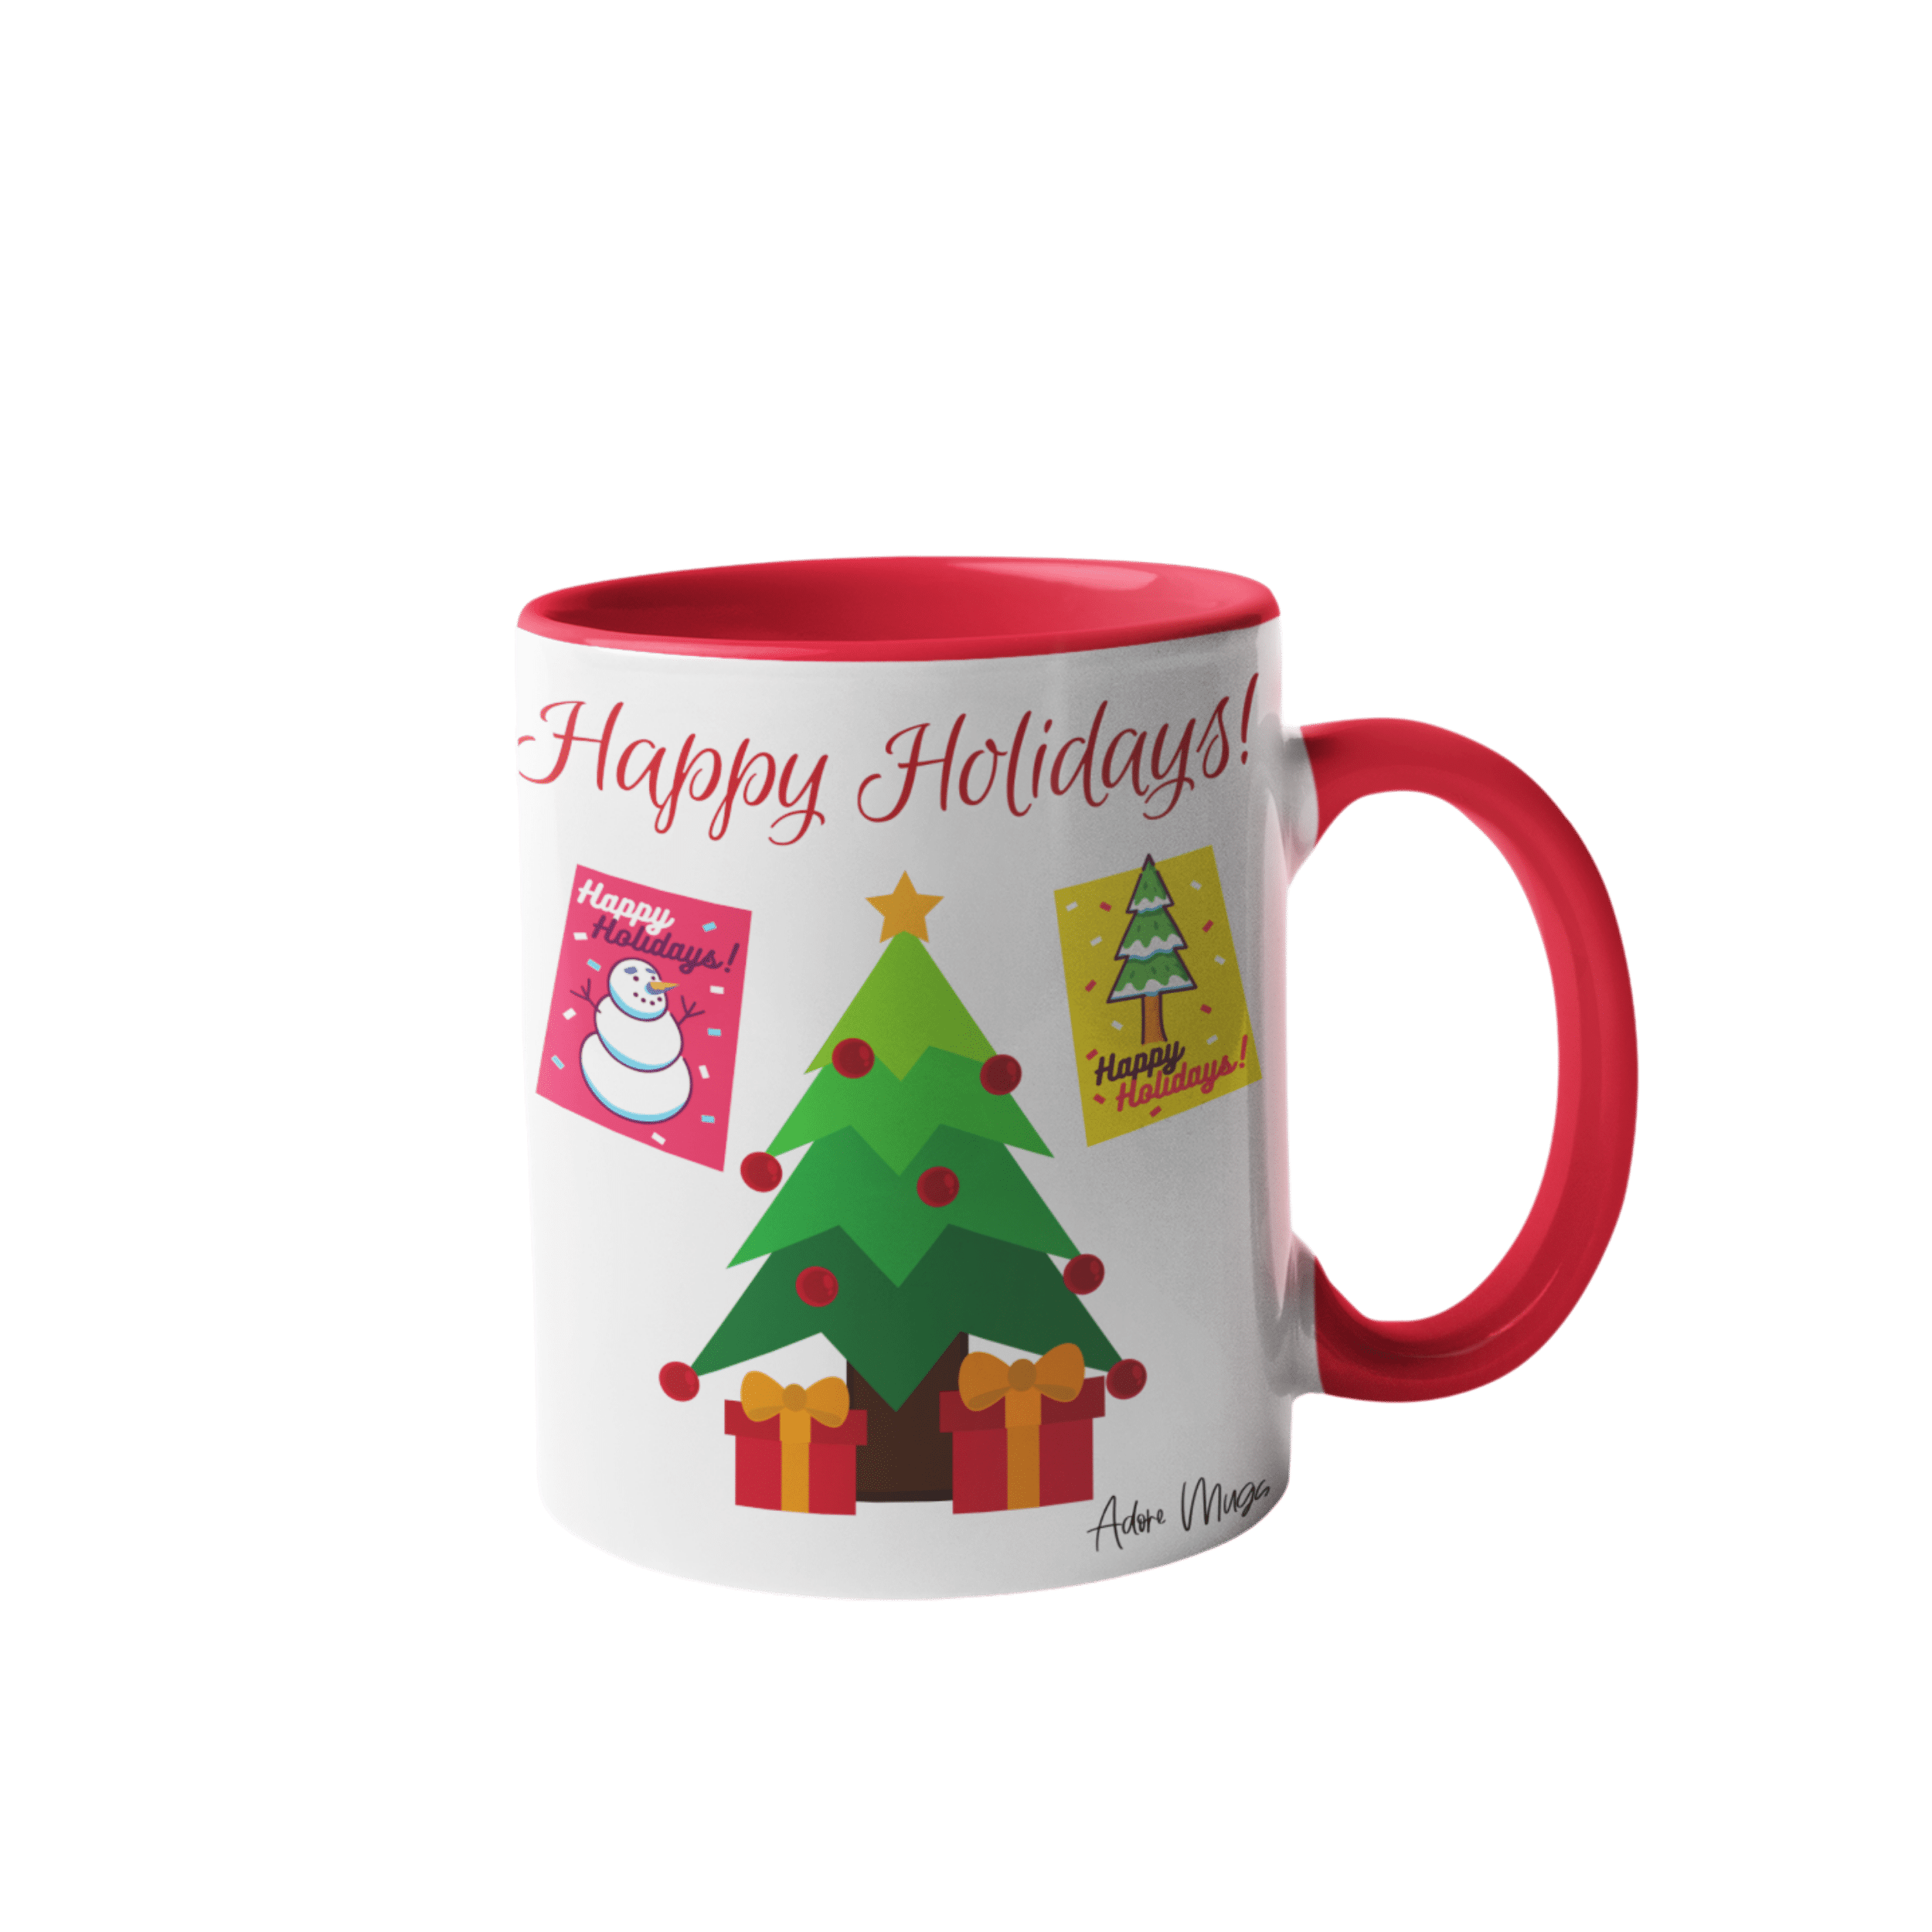 Friends Holiday Coffee Mug Christmas Coffee Mug Funny Christmas Movie Mugs Gift from Family Mug in Decorative Christmas Gift Box,11 Oz